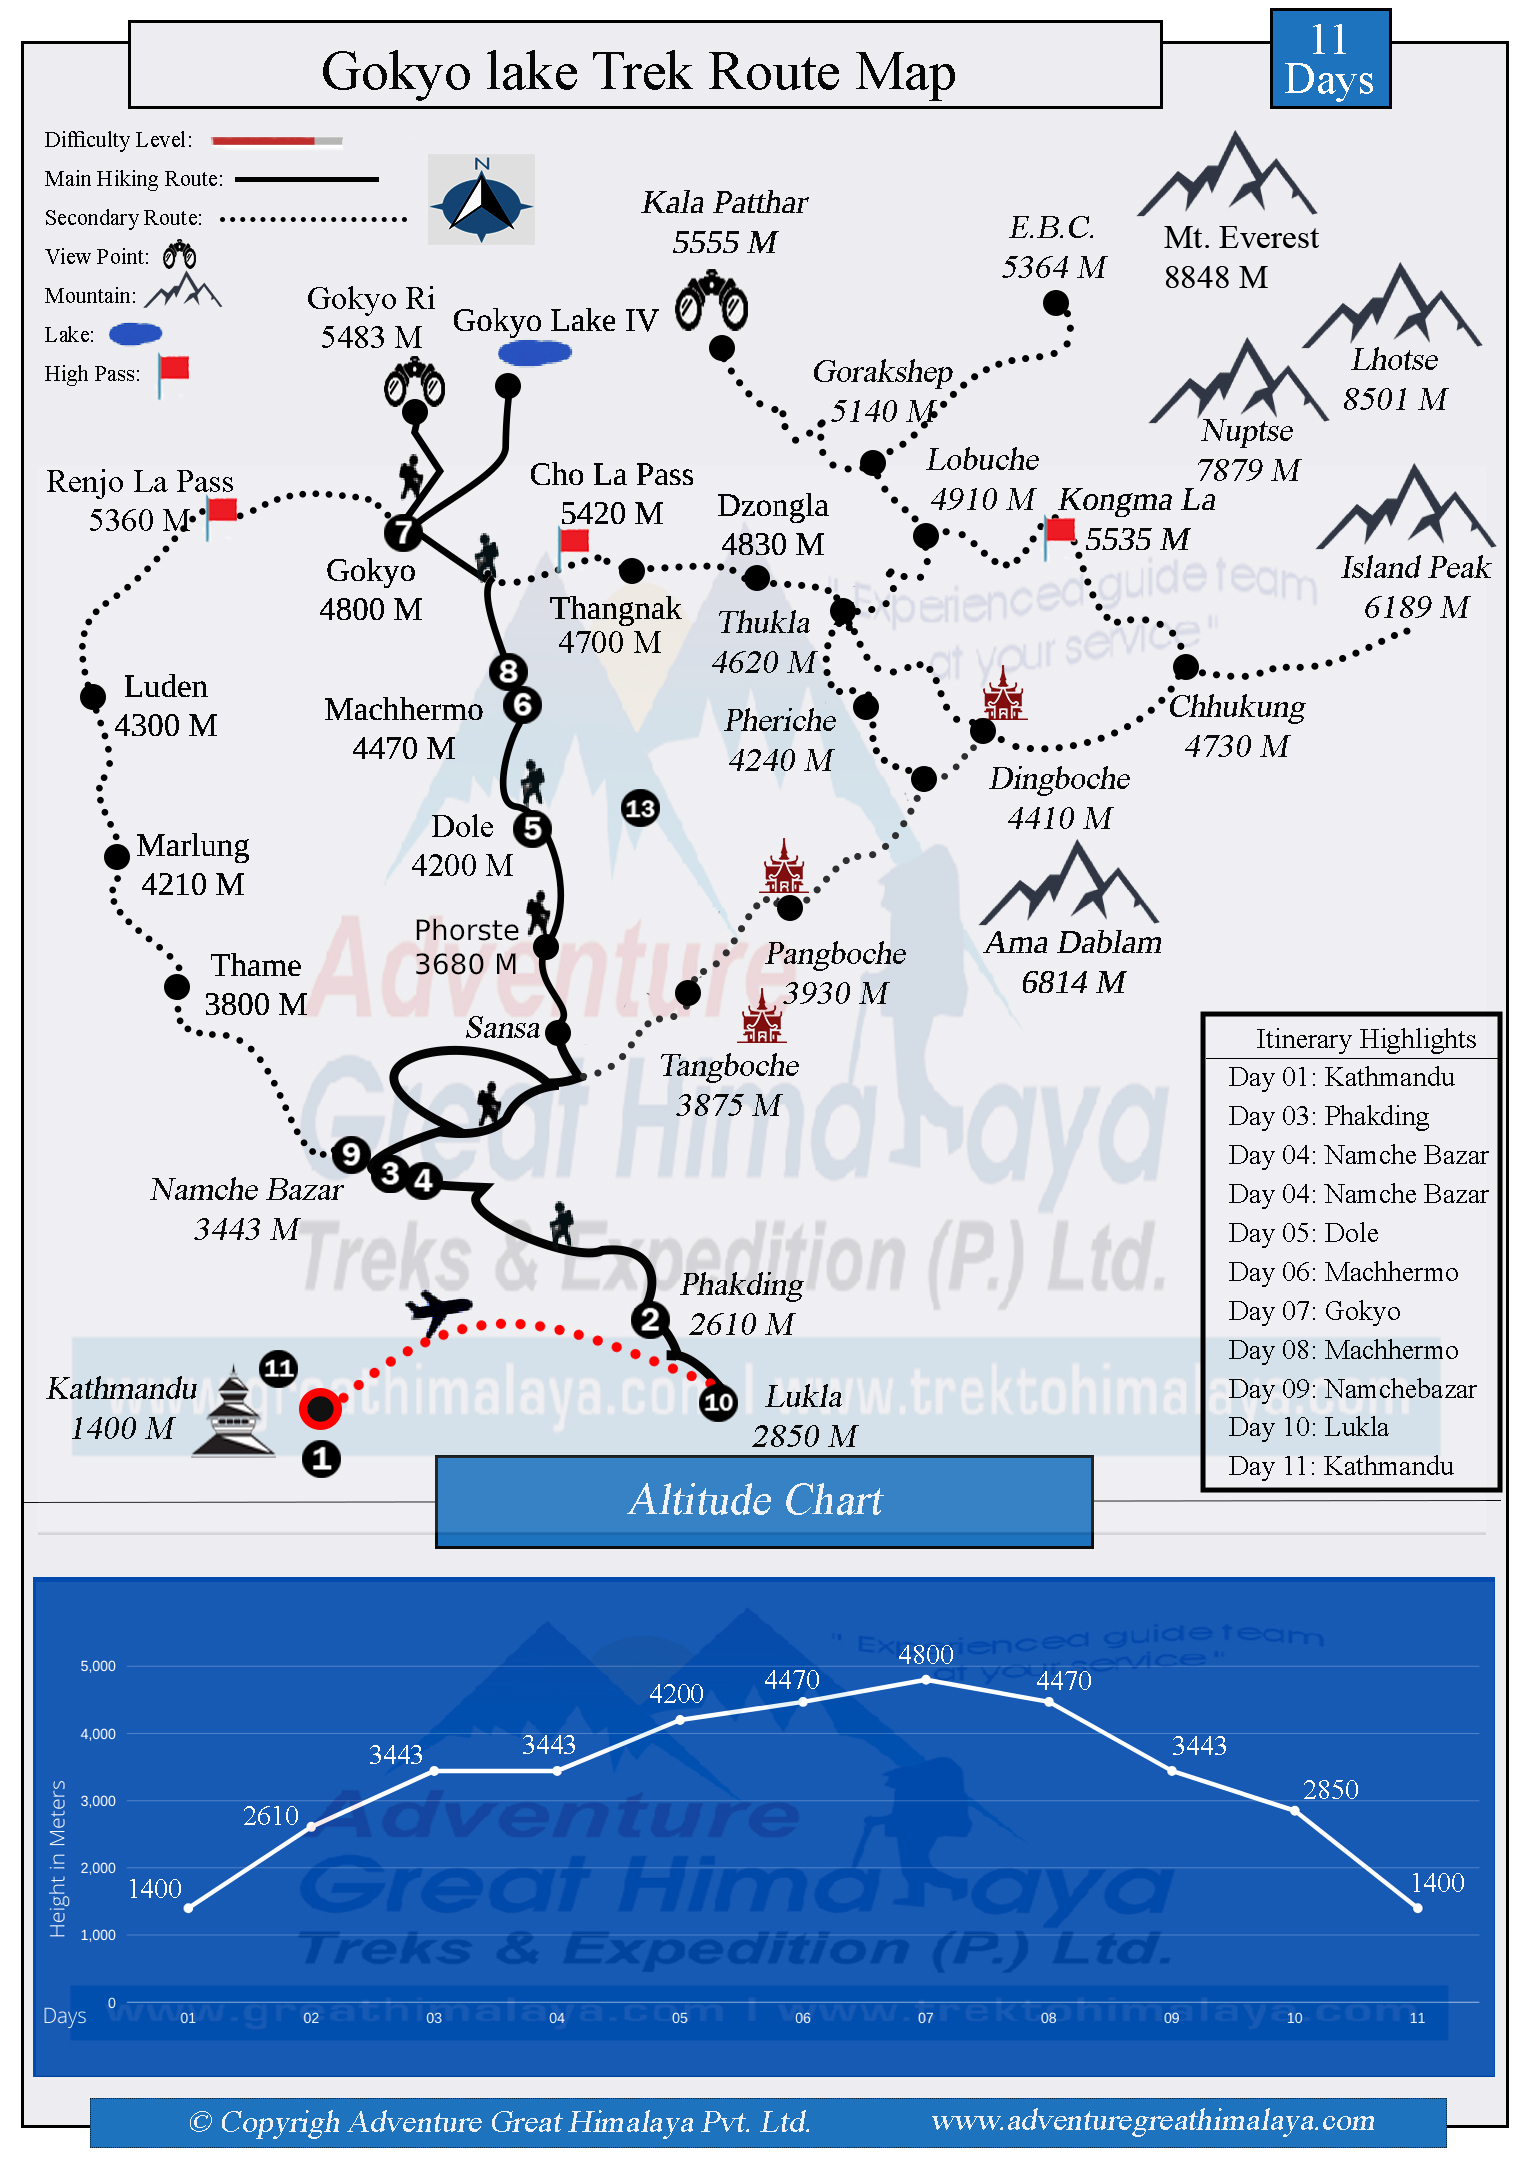 Gokyo lake Trek Route Map